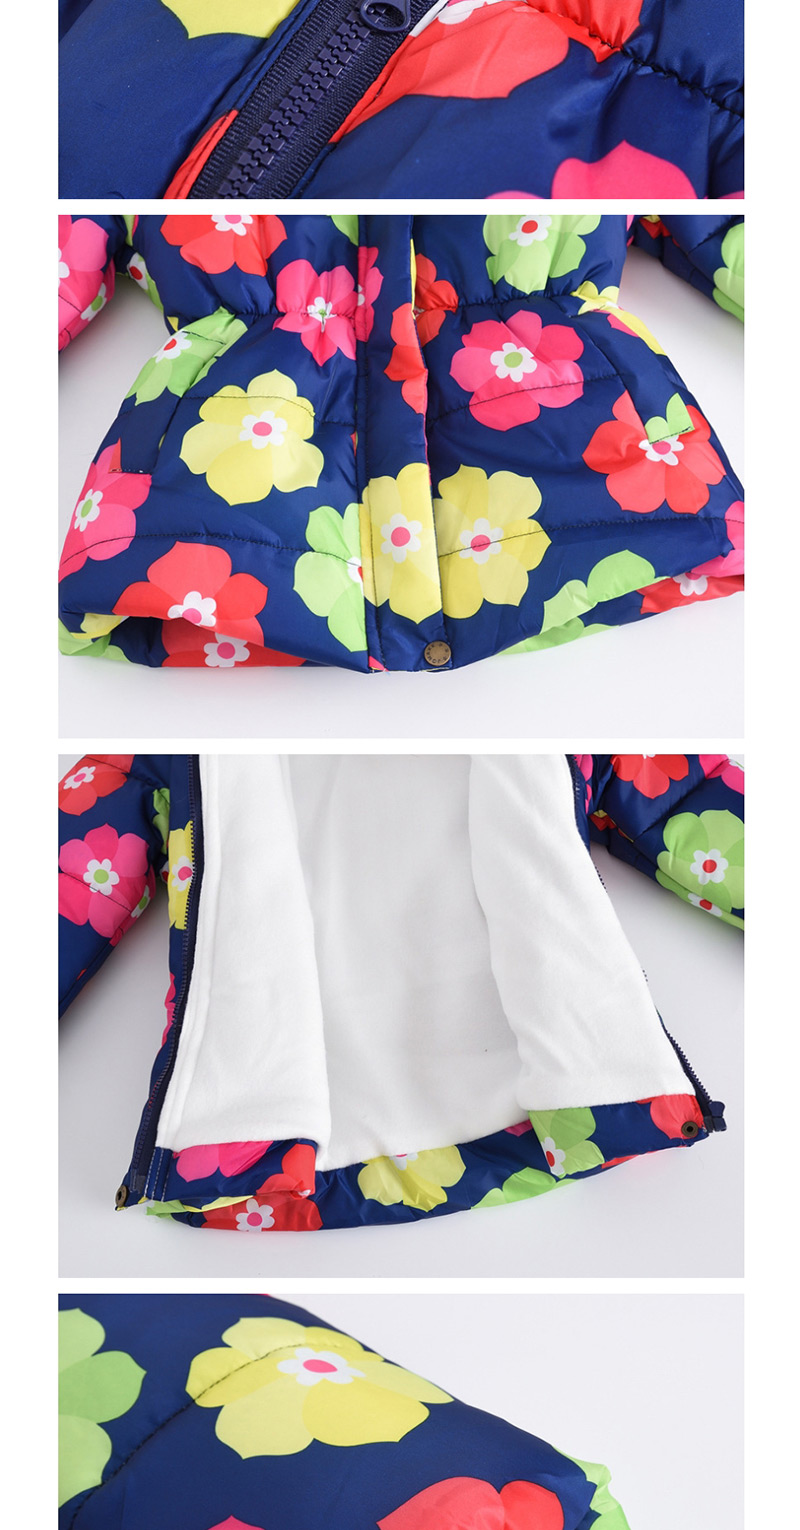 Fashion Foundation Butterfly Flower Print Cartoon Fur Collar Big Boy Hooded Cotton Coat,Kids Clothing